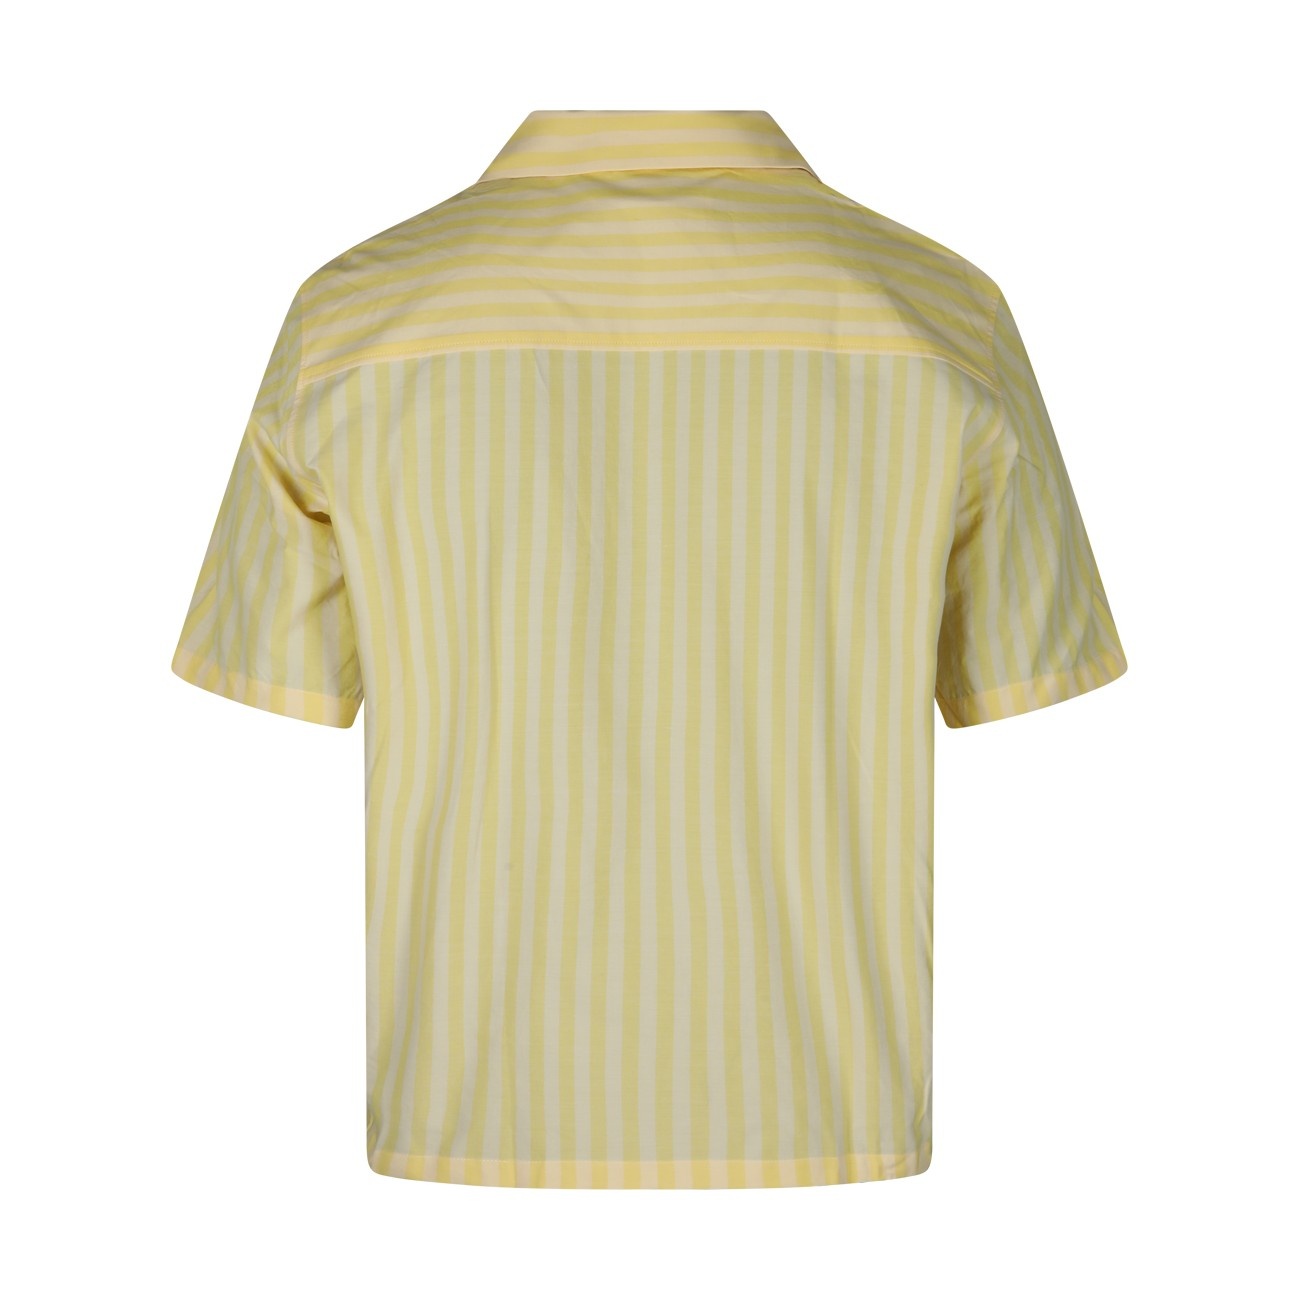 light yellow shirt - 2